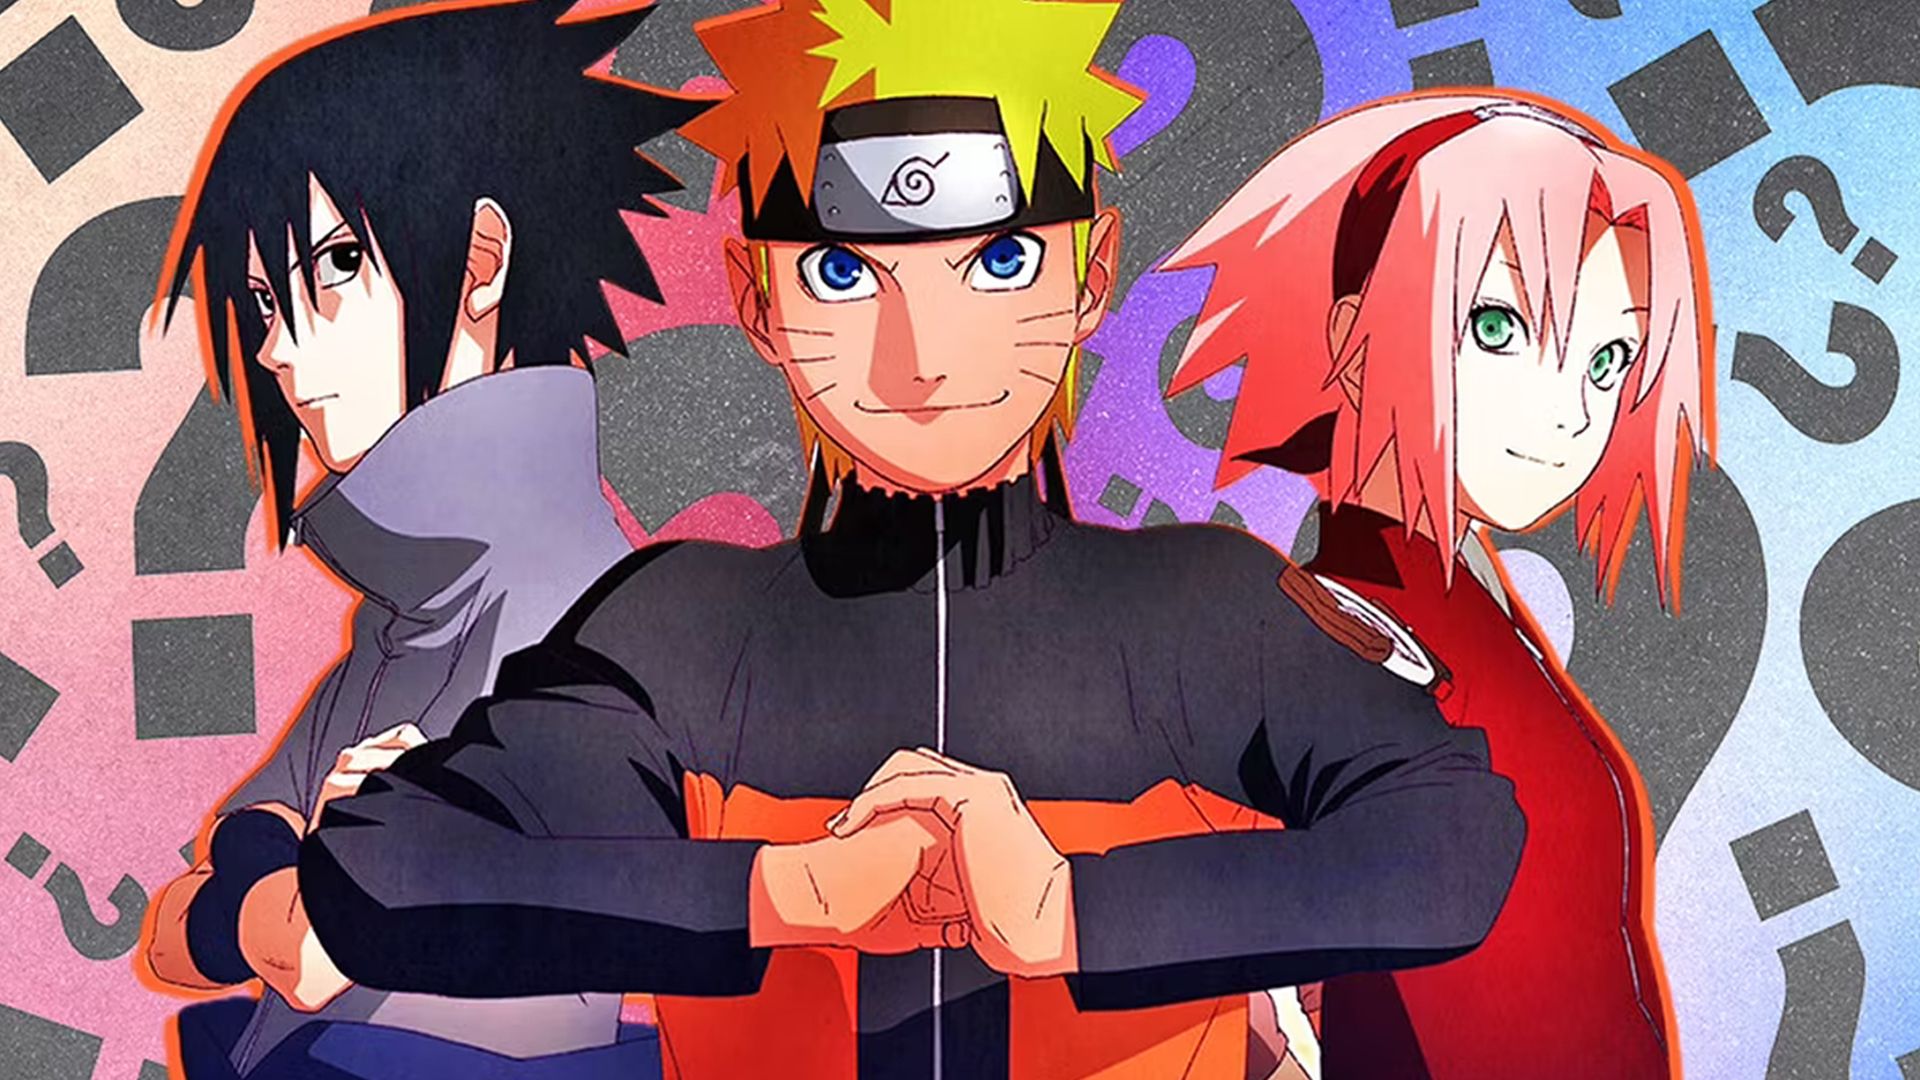 Naruto in front of Sasuke and Sakura.